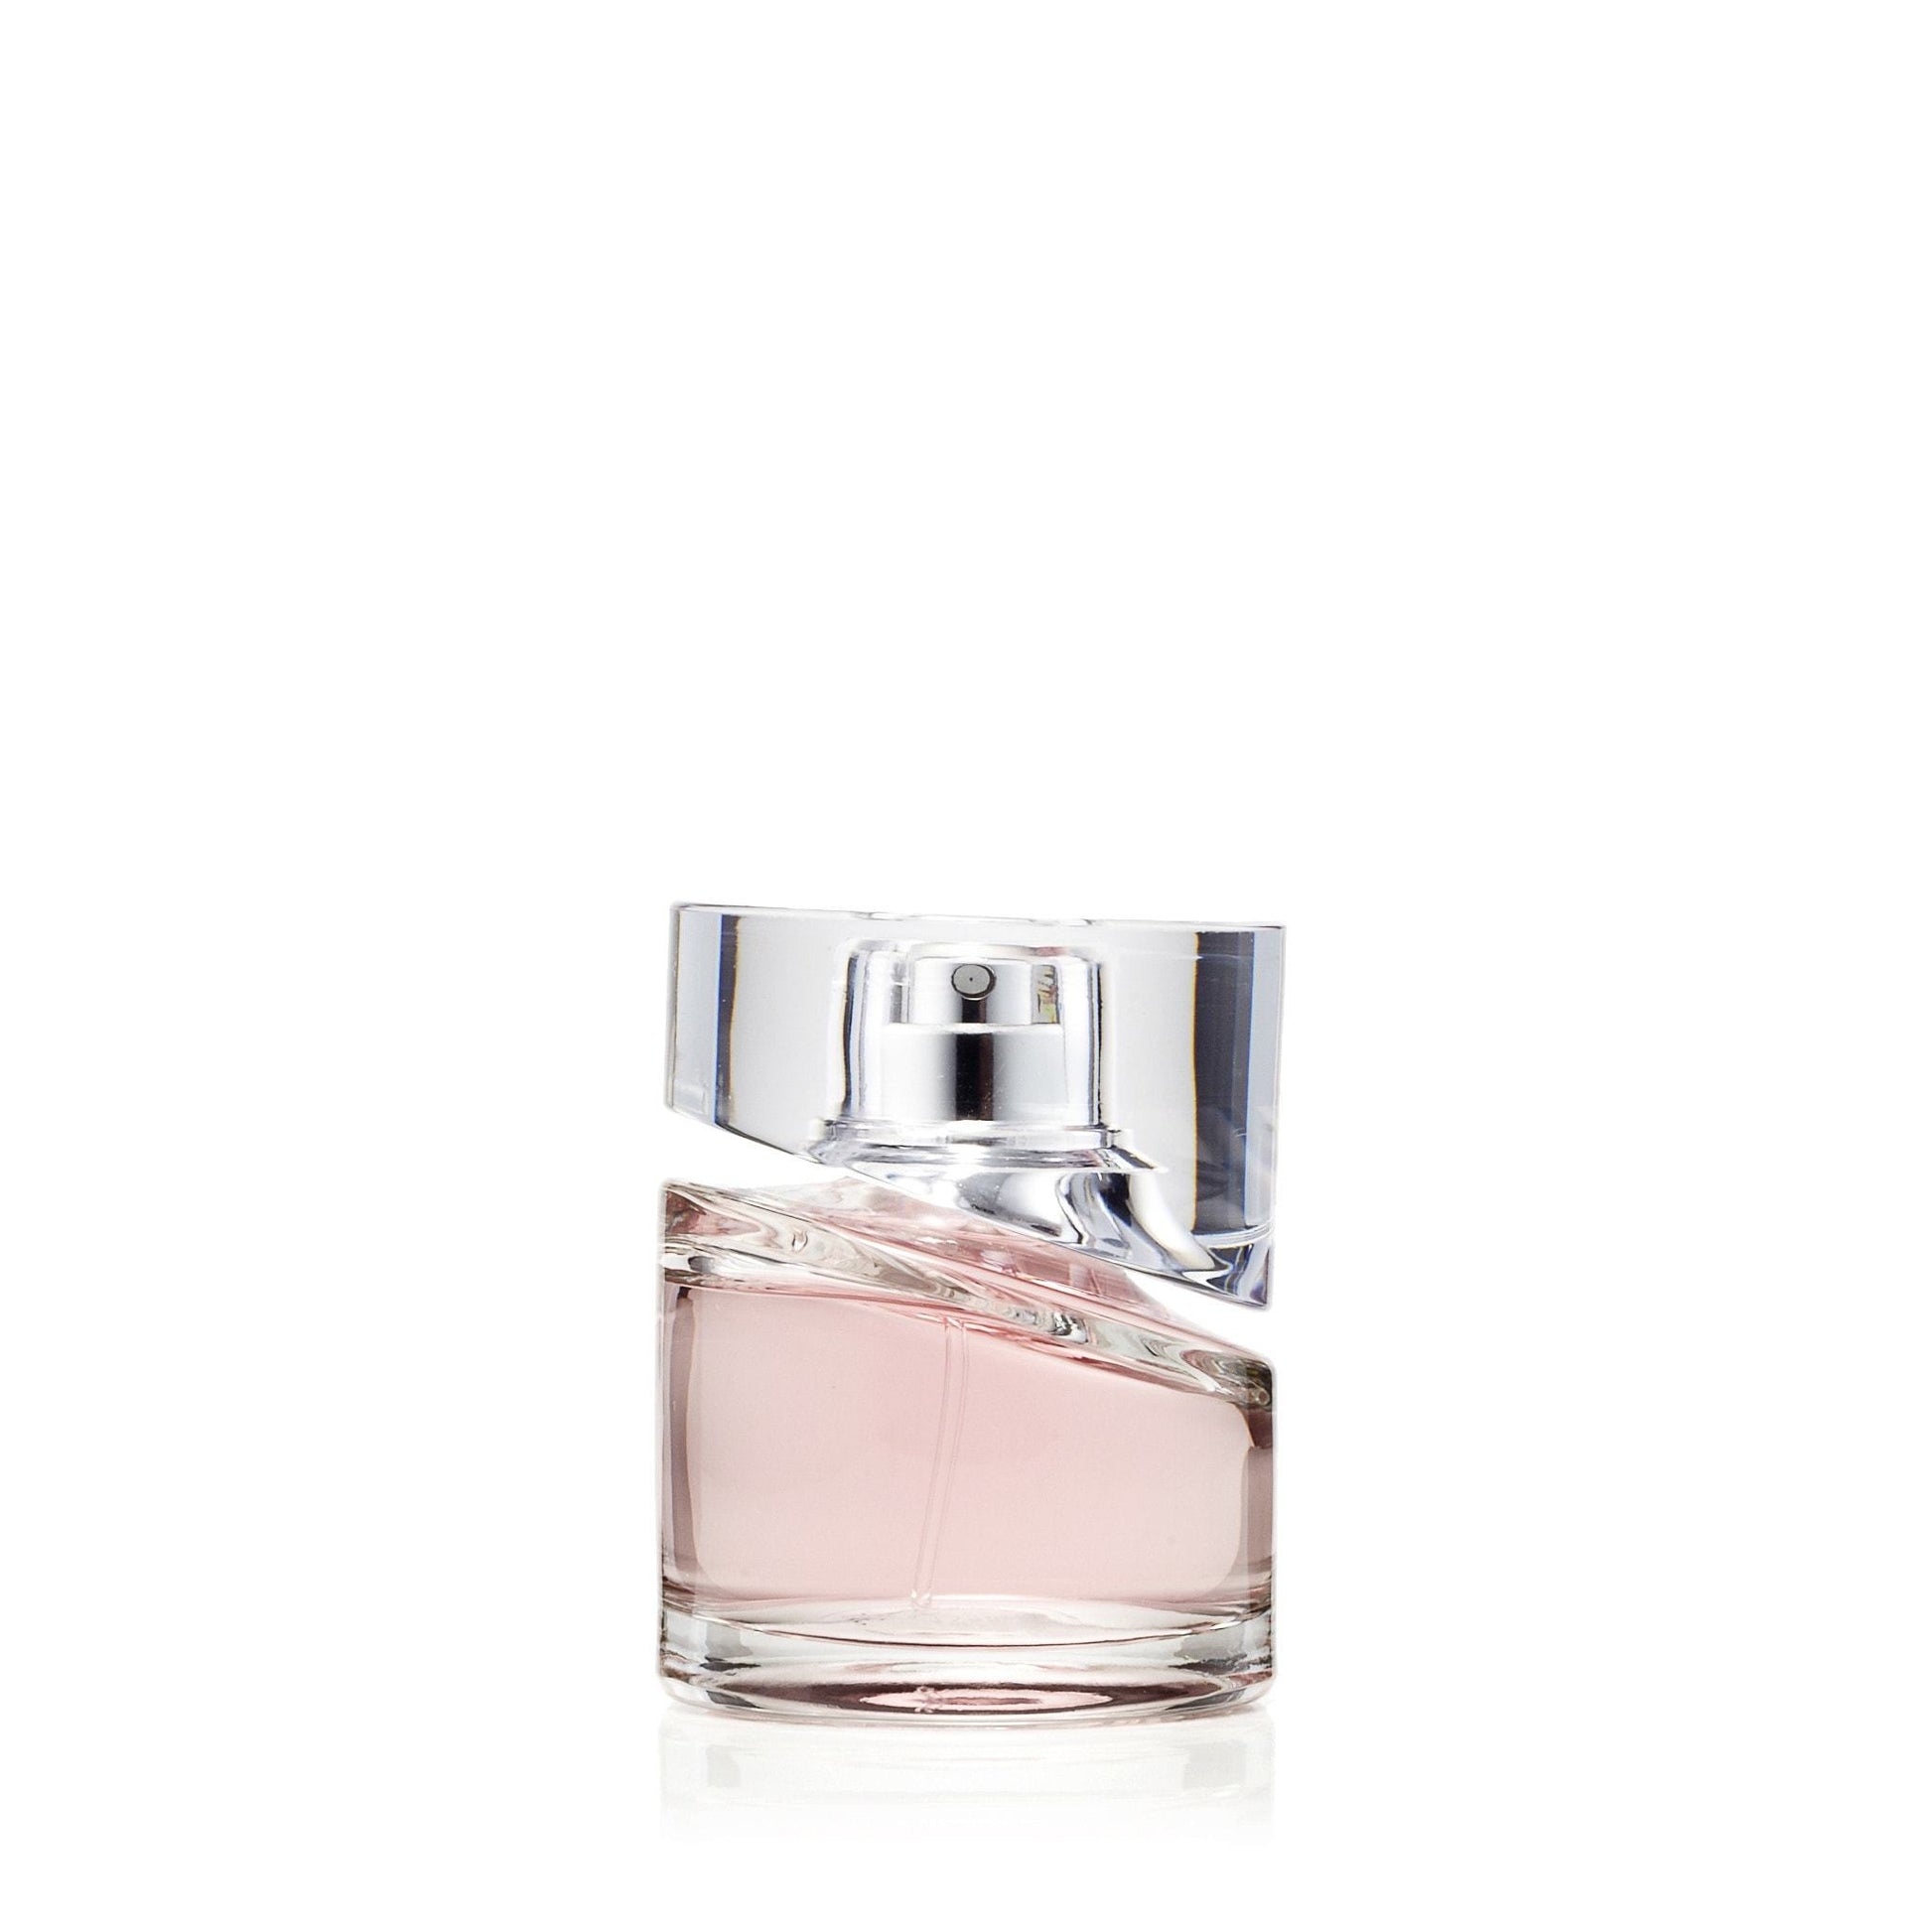 Femme Eau de Parfum Spray for Women by Hugo Boss, Product image 3